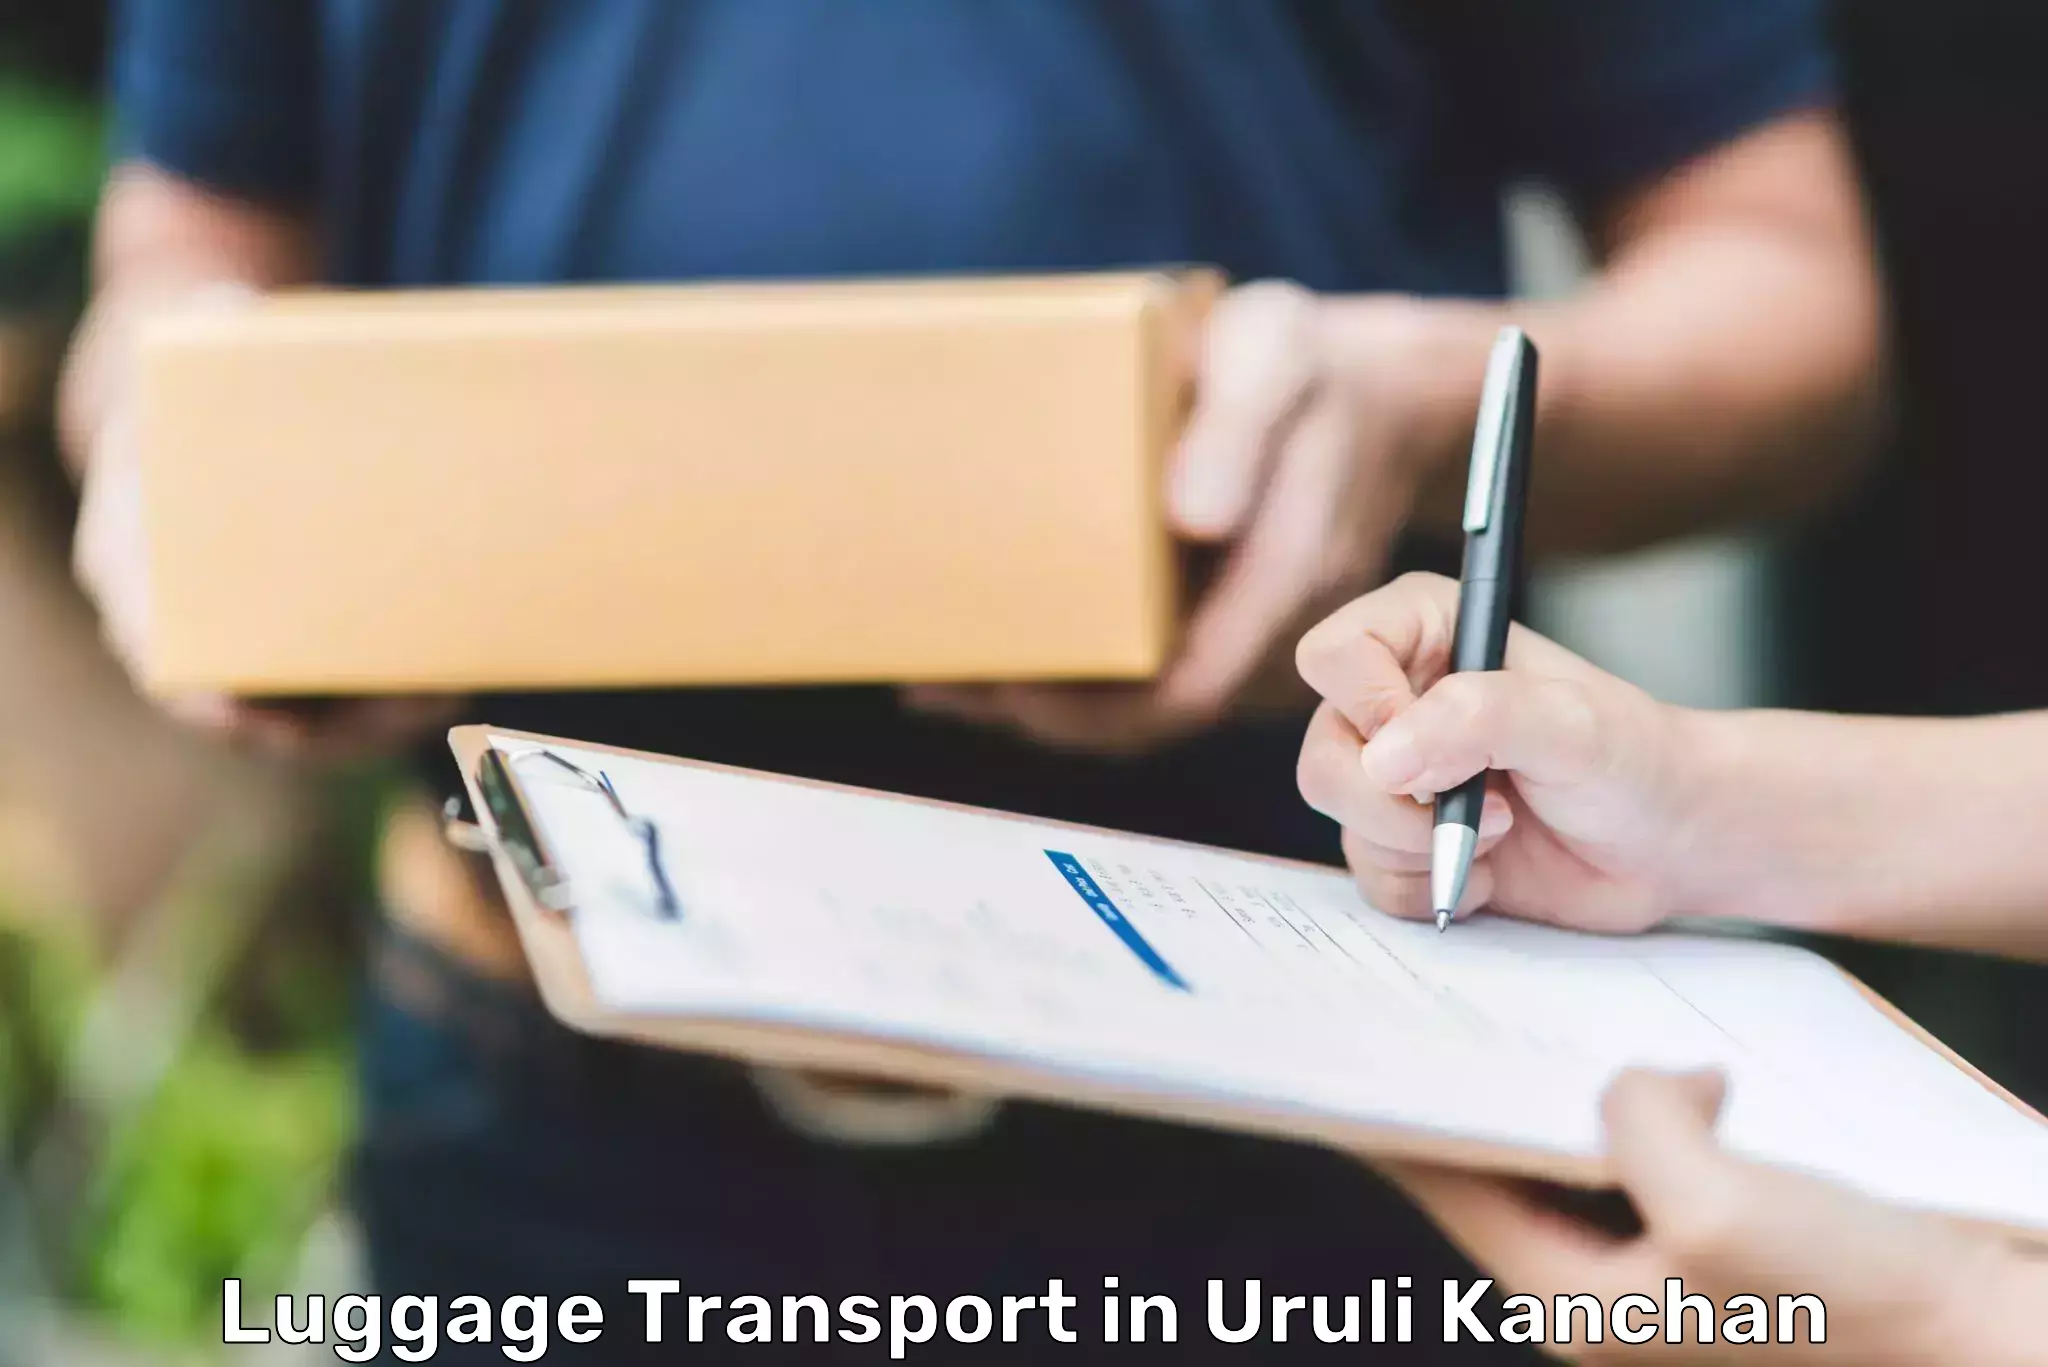 Luggage shipment specialists in Uruli Kanchan